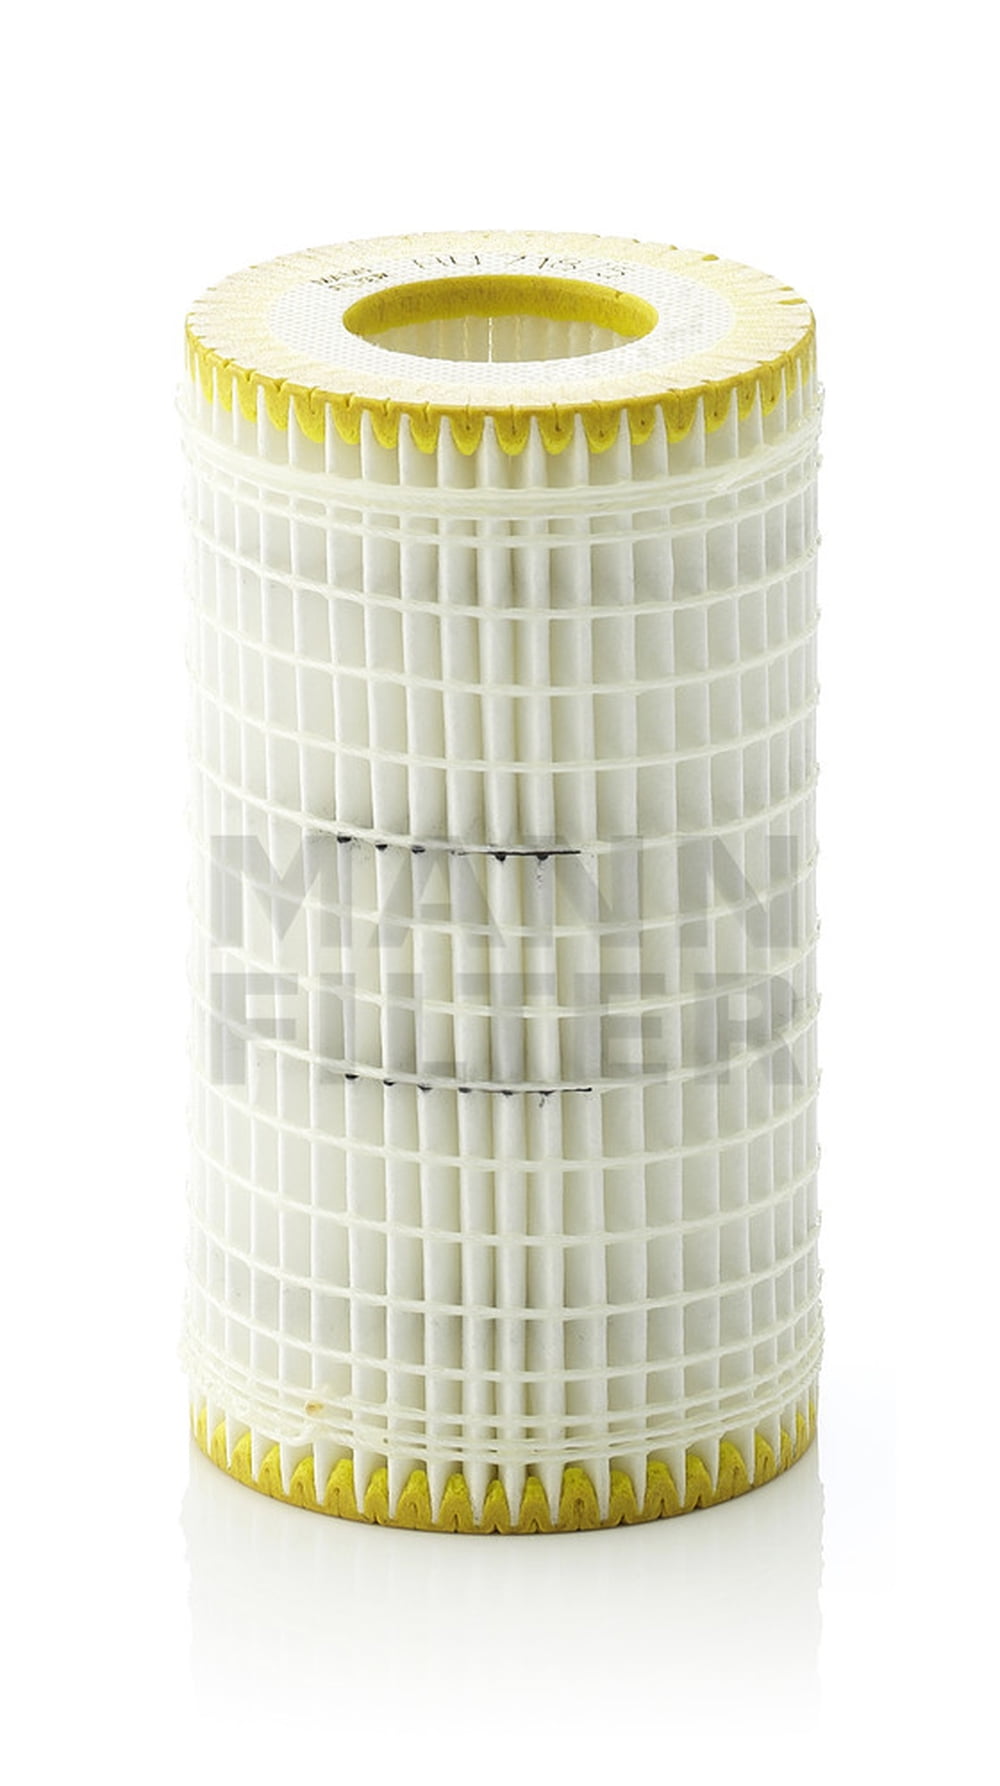  MANN-FILTER HU 718/1 K Cartridge Oil Filter : Automotive